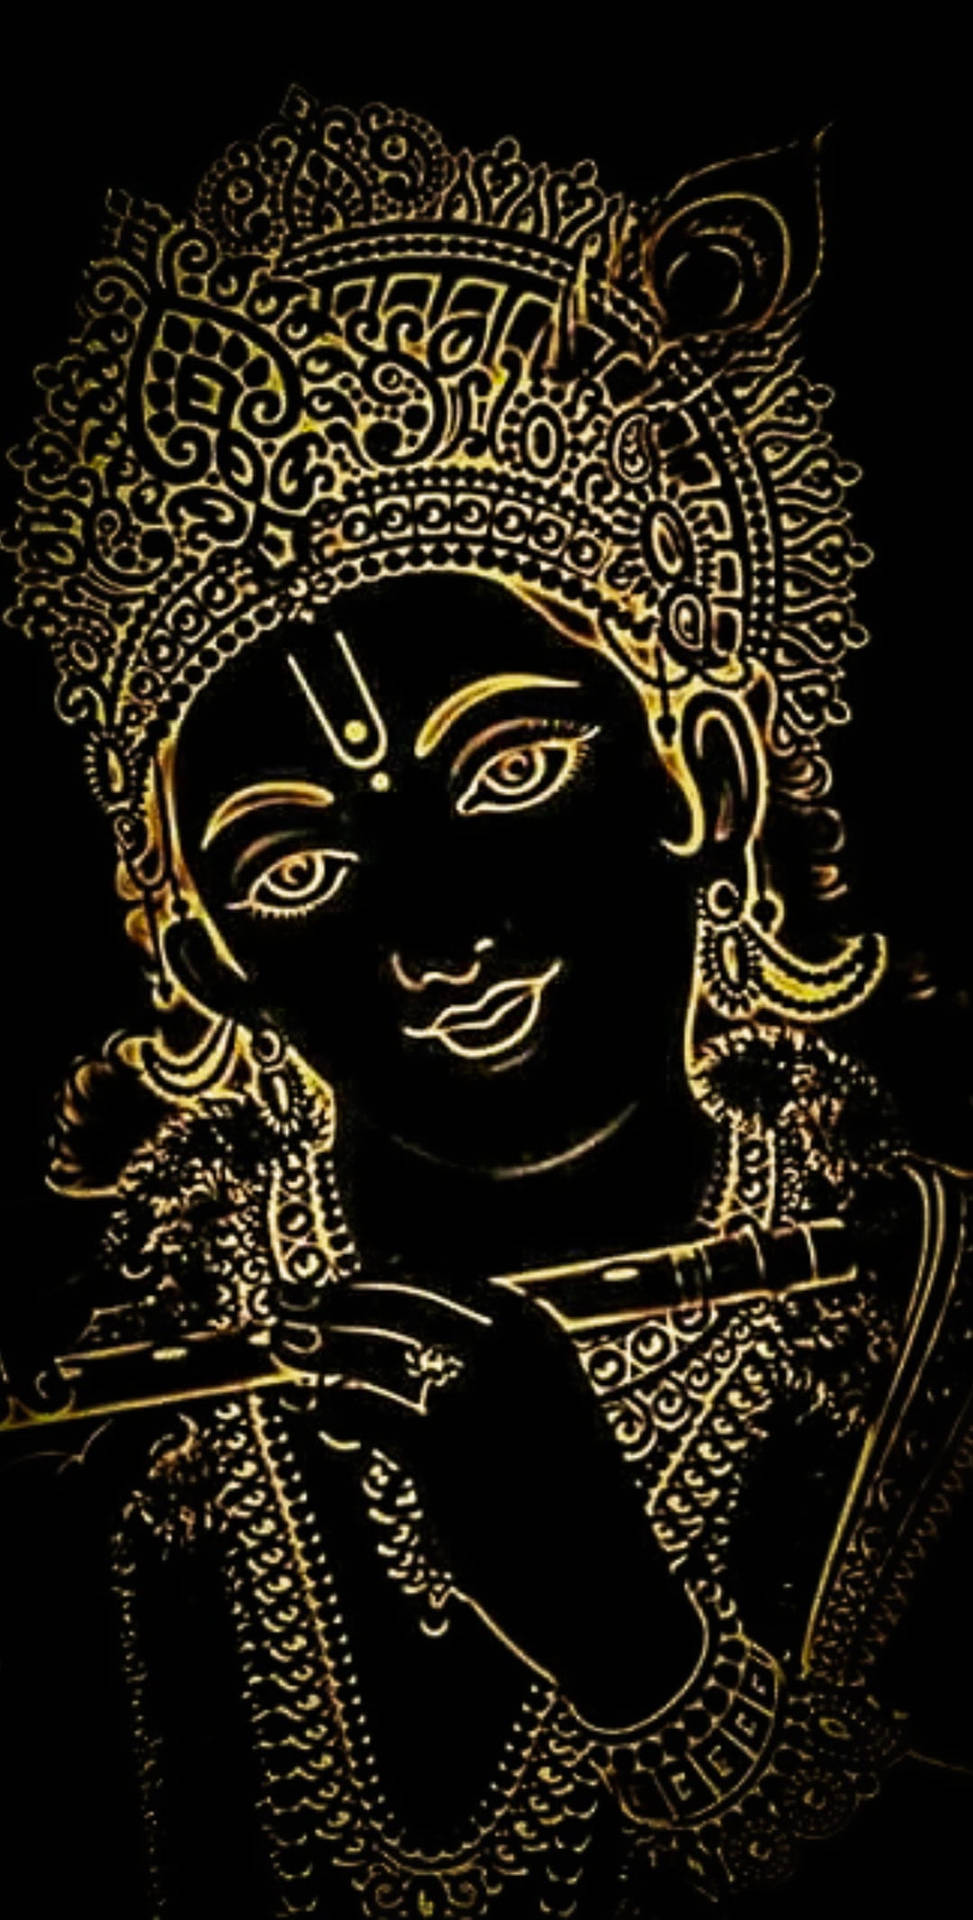  Krishna Sketch Wallpaper Download 23  MyGodImages